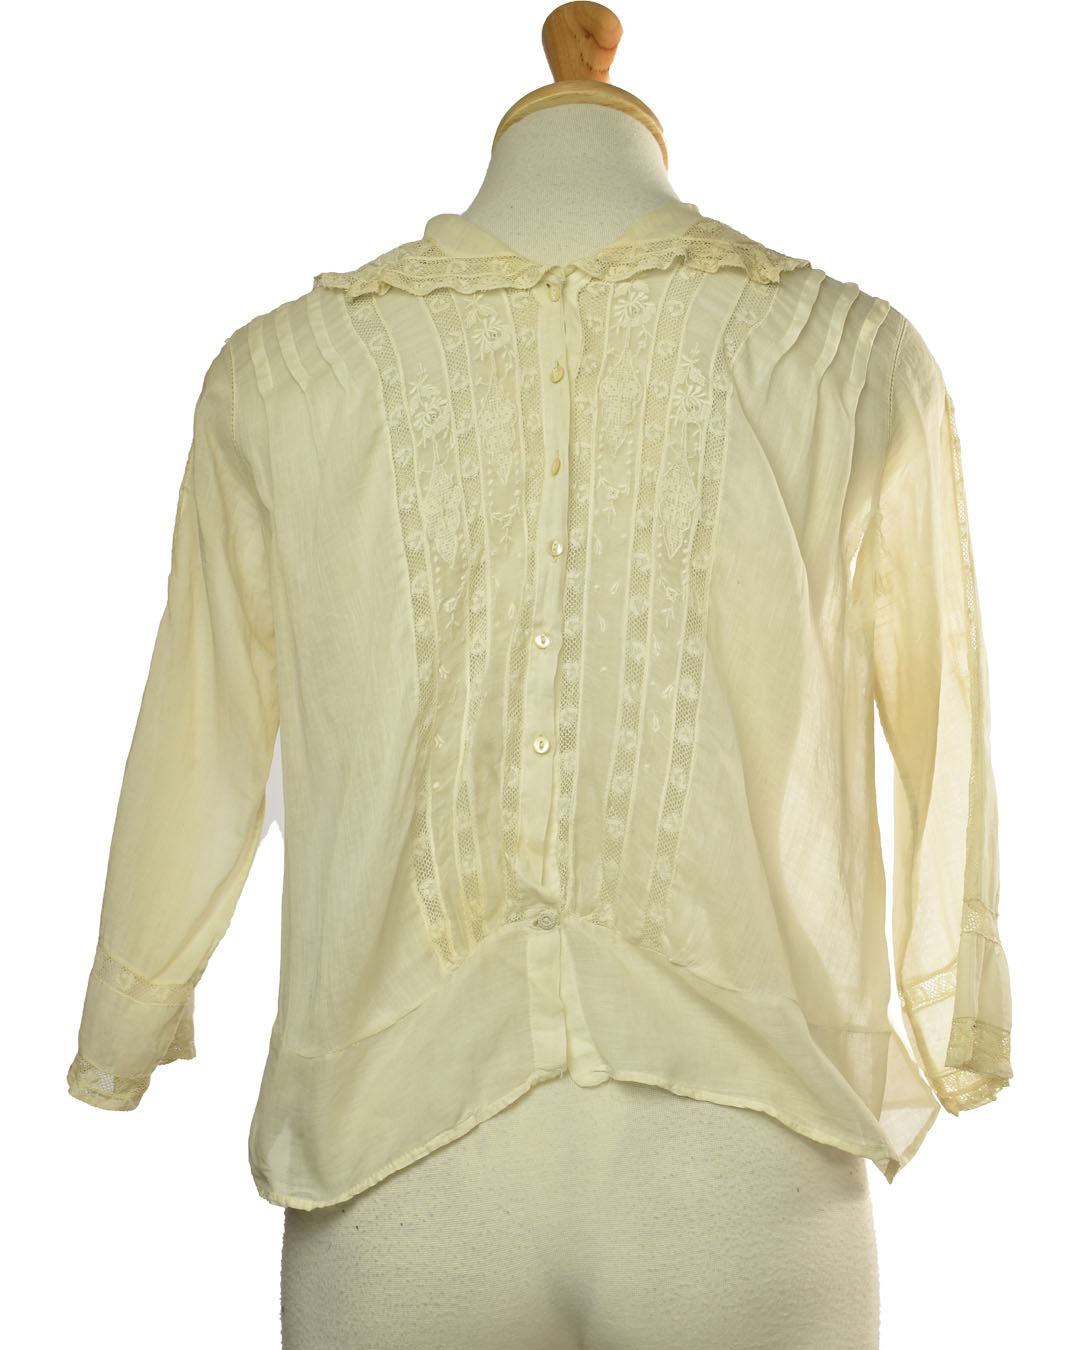 Antique Edwardian Cotton Lace Embroidered Blouse